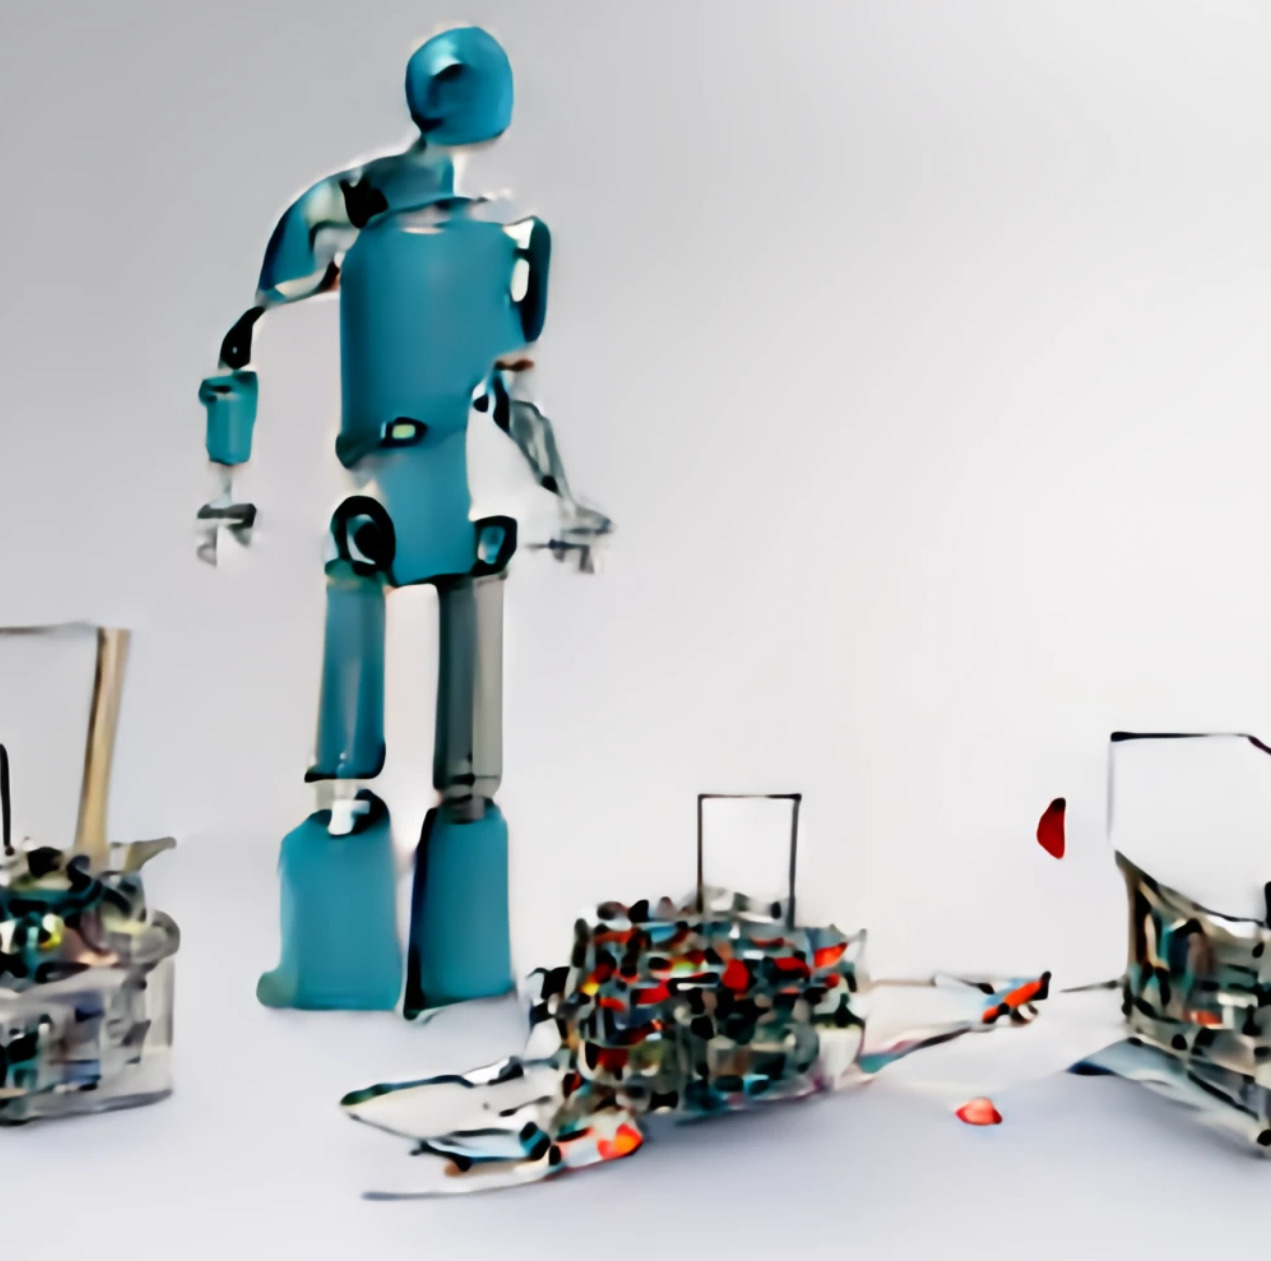 Voxel Self-Replicating Robots